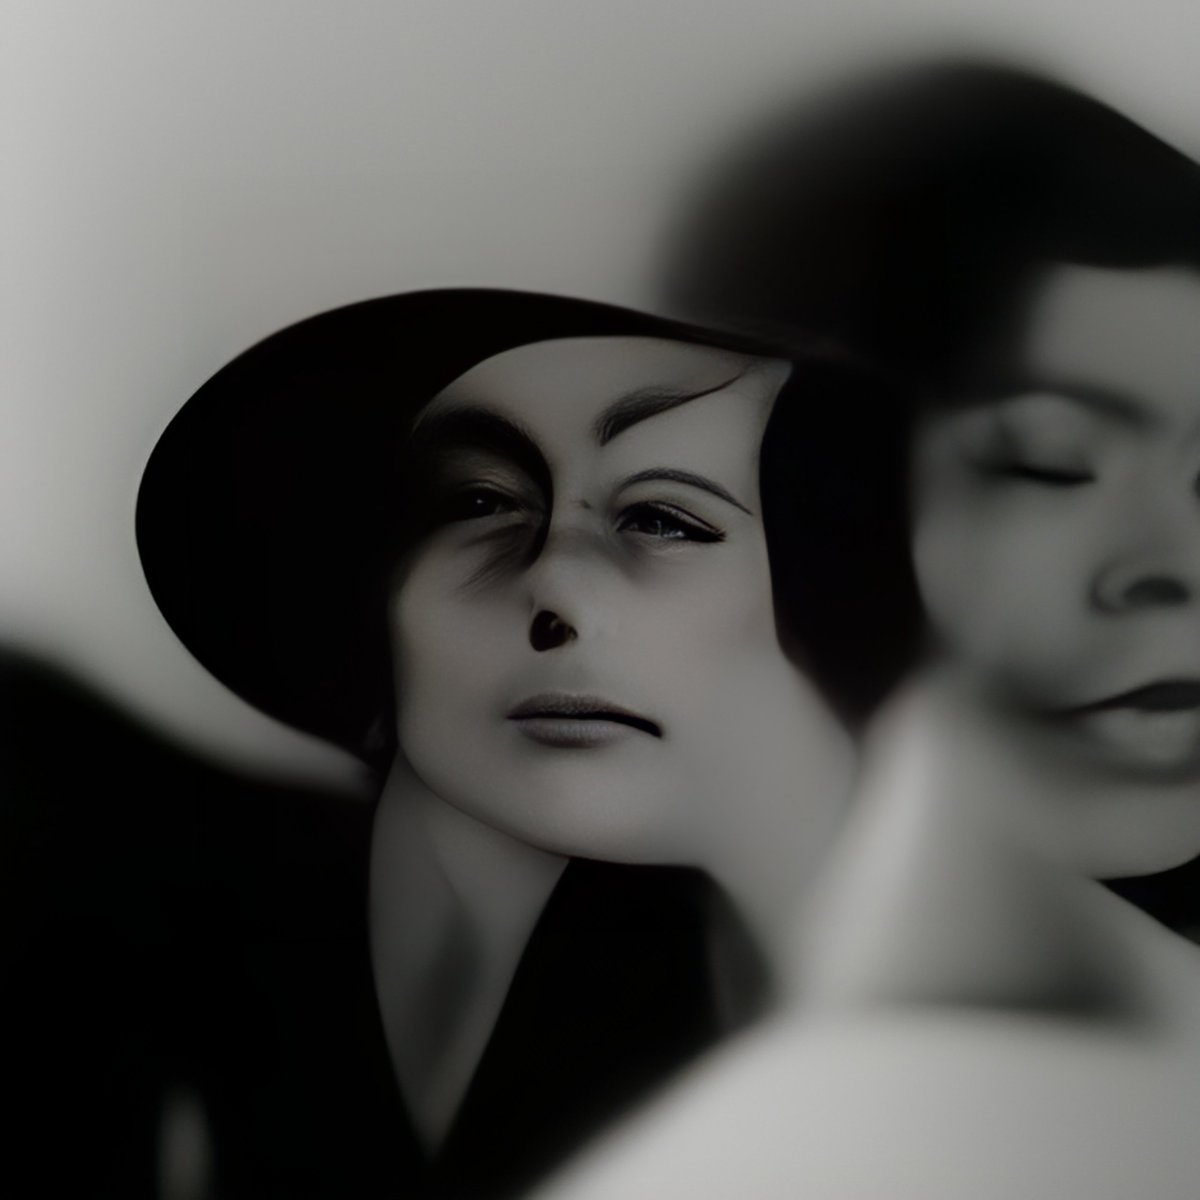 📸 exploring #HenriCartierBresson
`Black and white portrait of a women locking at the camera`

#generativeart  #clipguideddiffusion #AIArtwork #cryptoartwork #art #AI #photography #digitalartwork